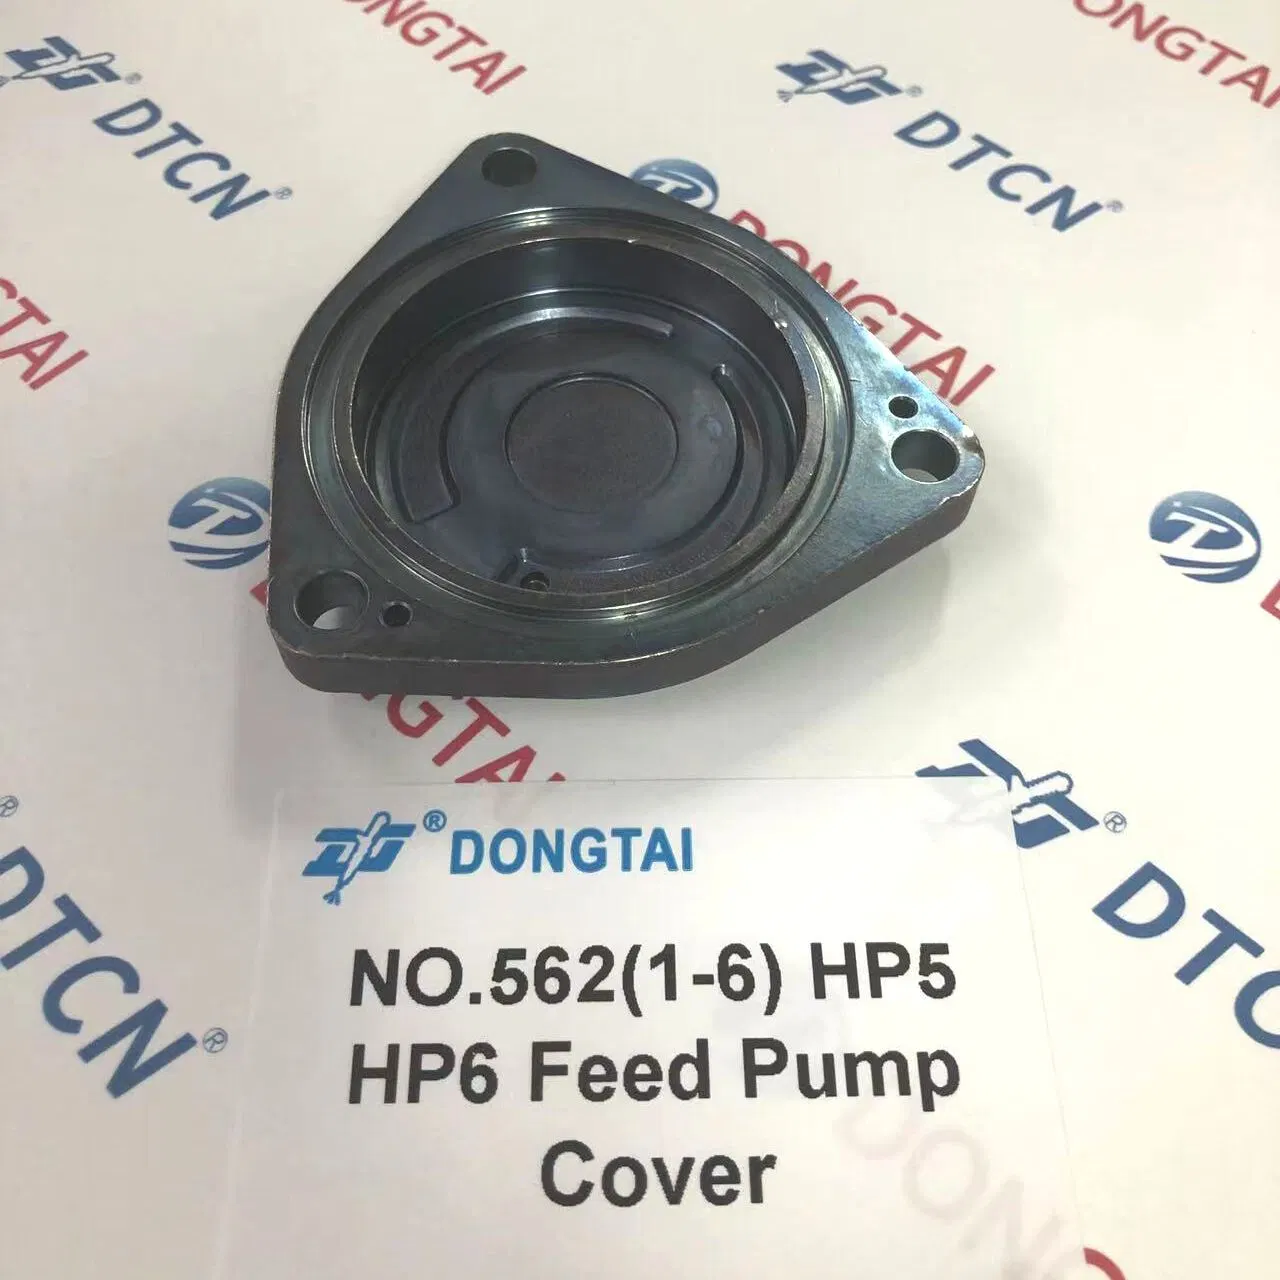 No. 562 (1-6) HP5 HP6 Feed Pump Cover